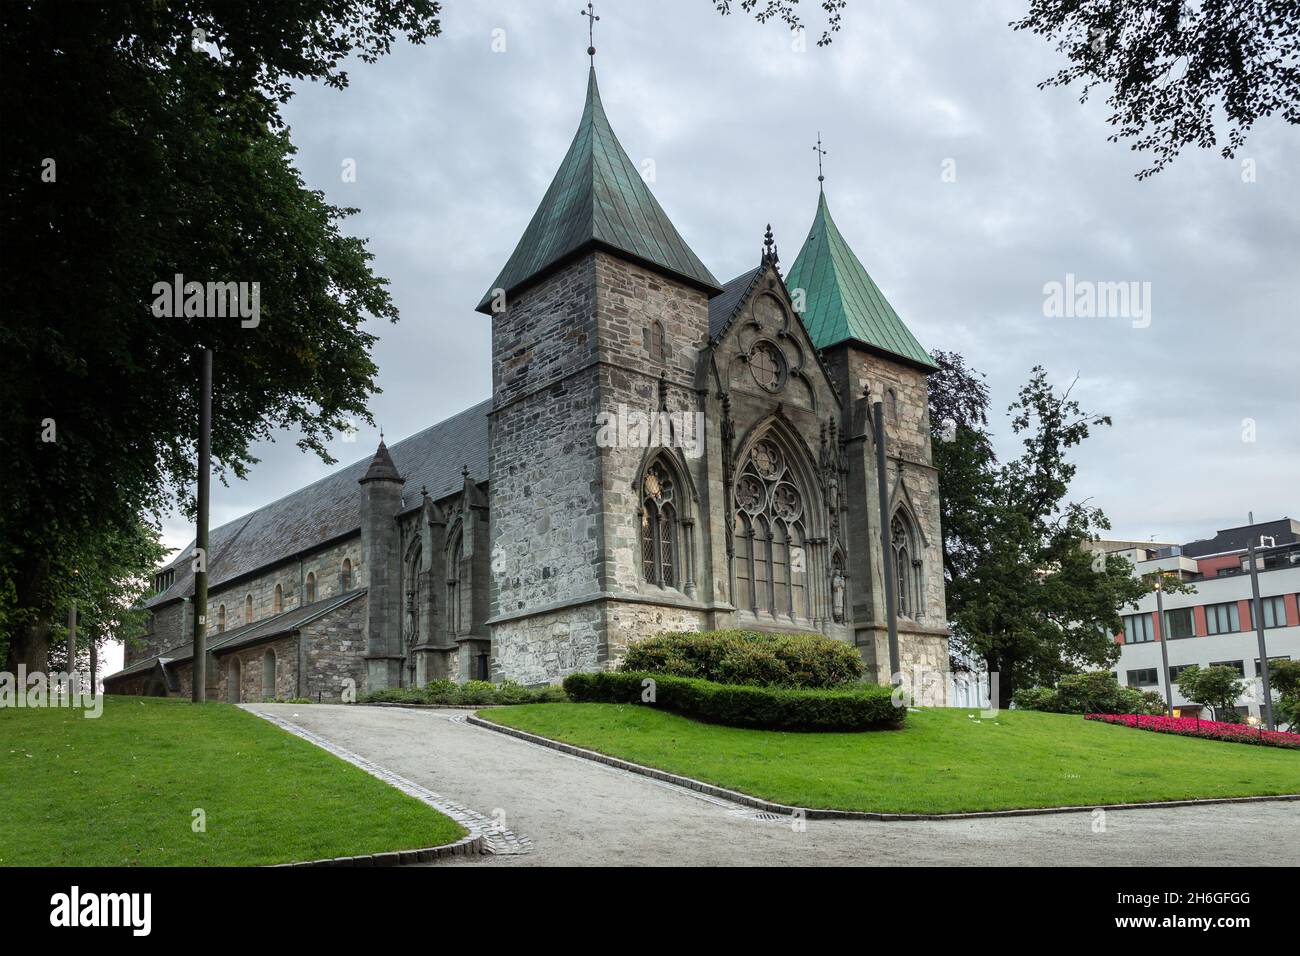 Stavanger, Norway: The Cathedral (Dormkirke), Kongsgata. 12th Century Romanesque design church. Stock Photo